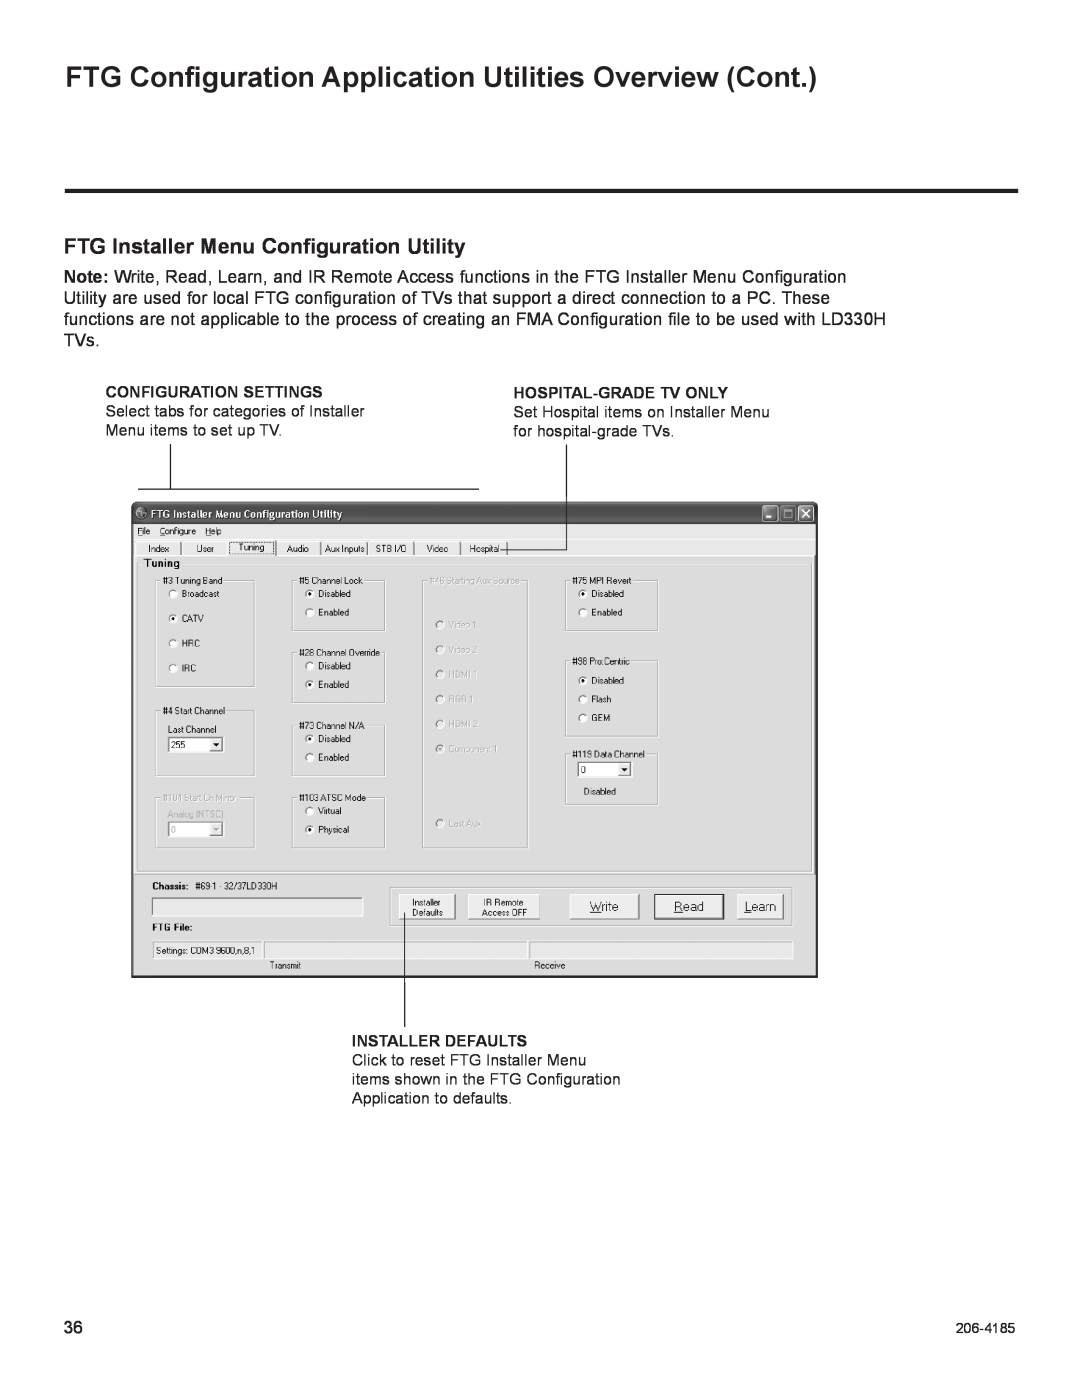 LG Electronics 32LD330H FTG Installer Menu Configuration Utility, FTG Configuration Application Utilities Overview Cont 